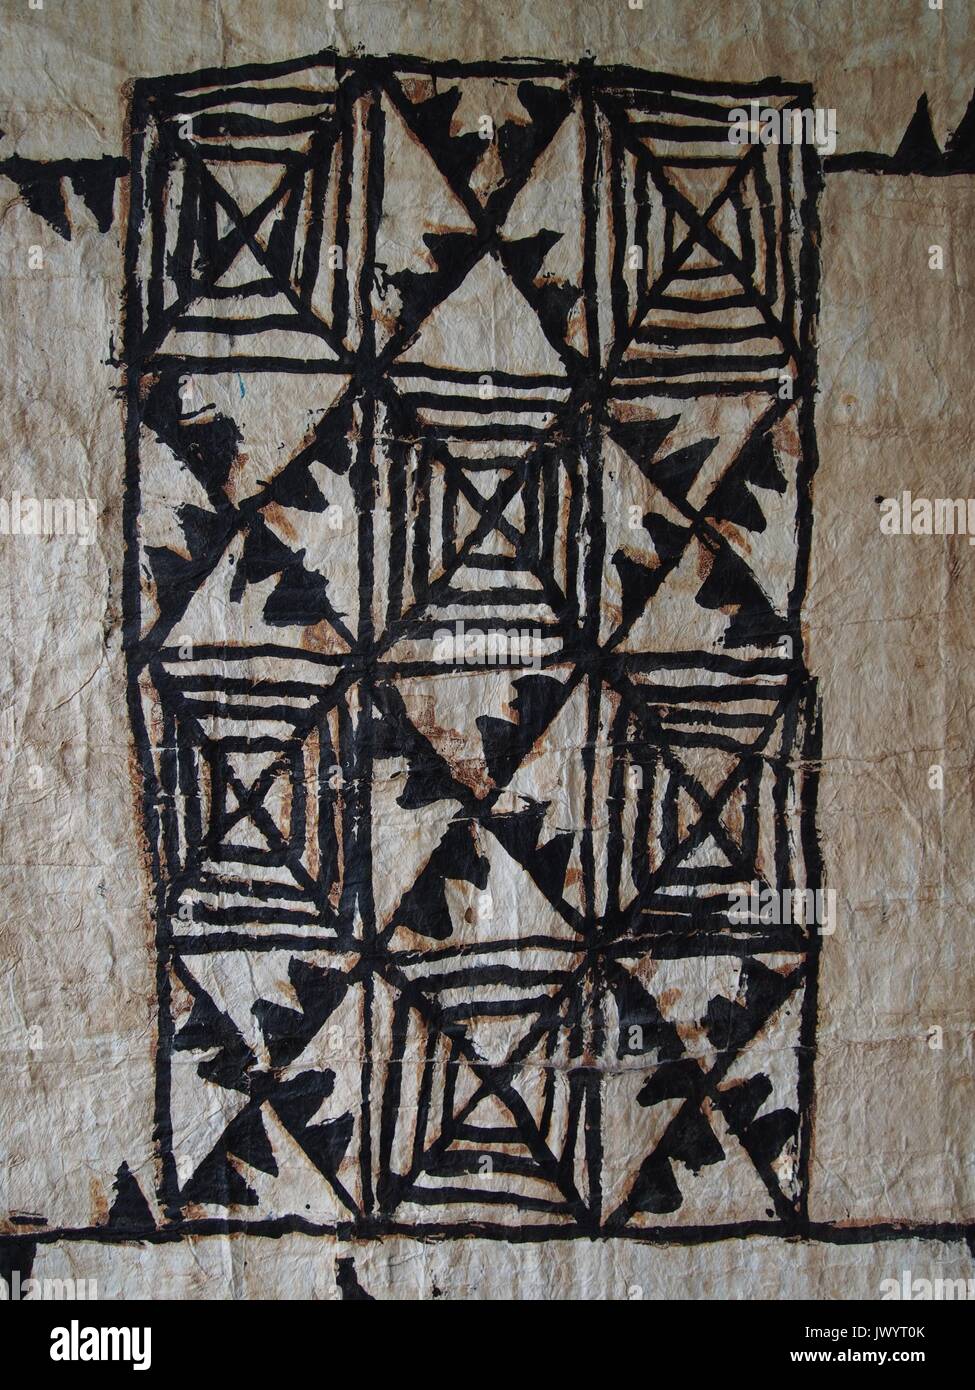 Detail of the geometric patterns on a Fijian tapa cloth. Stock Photo